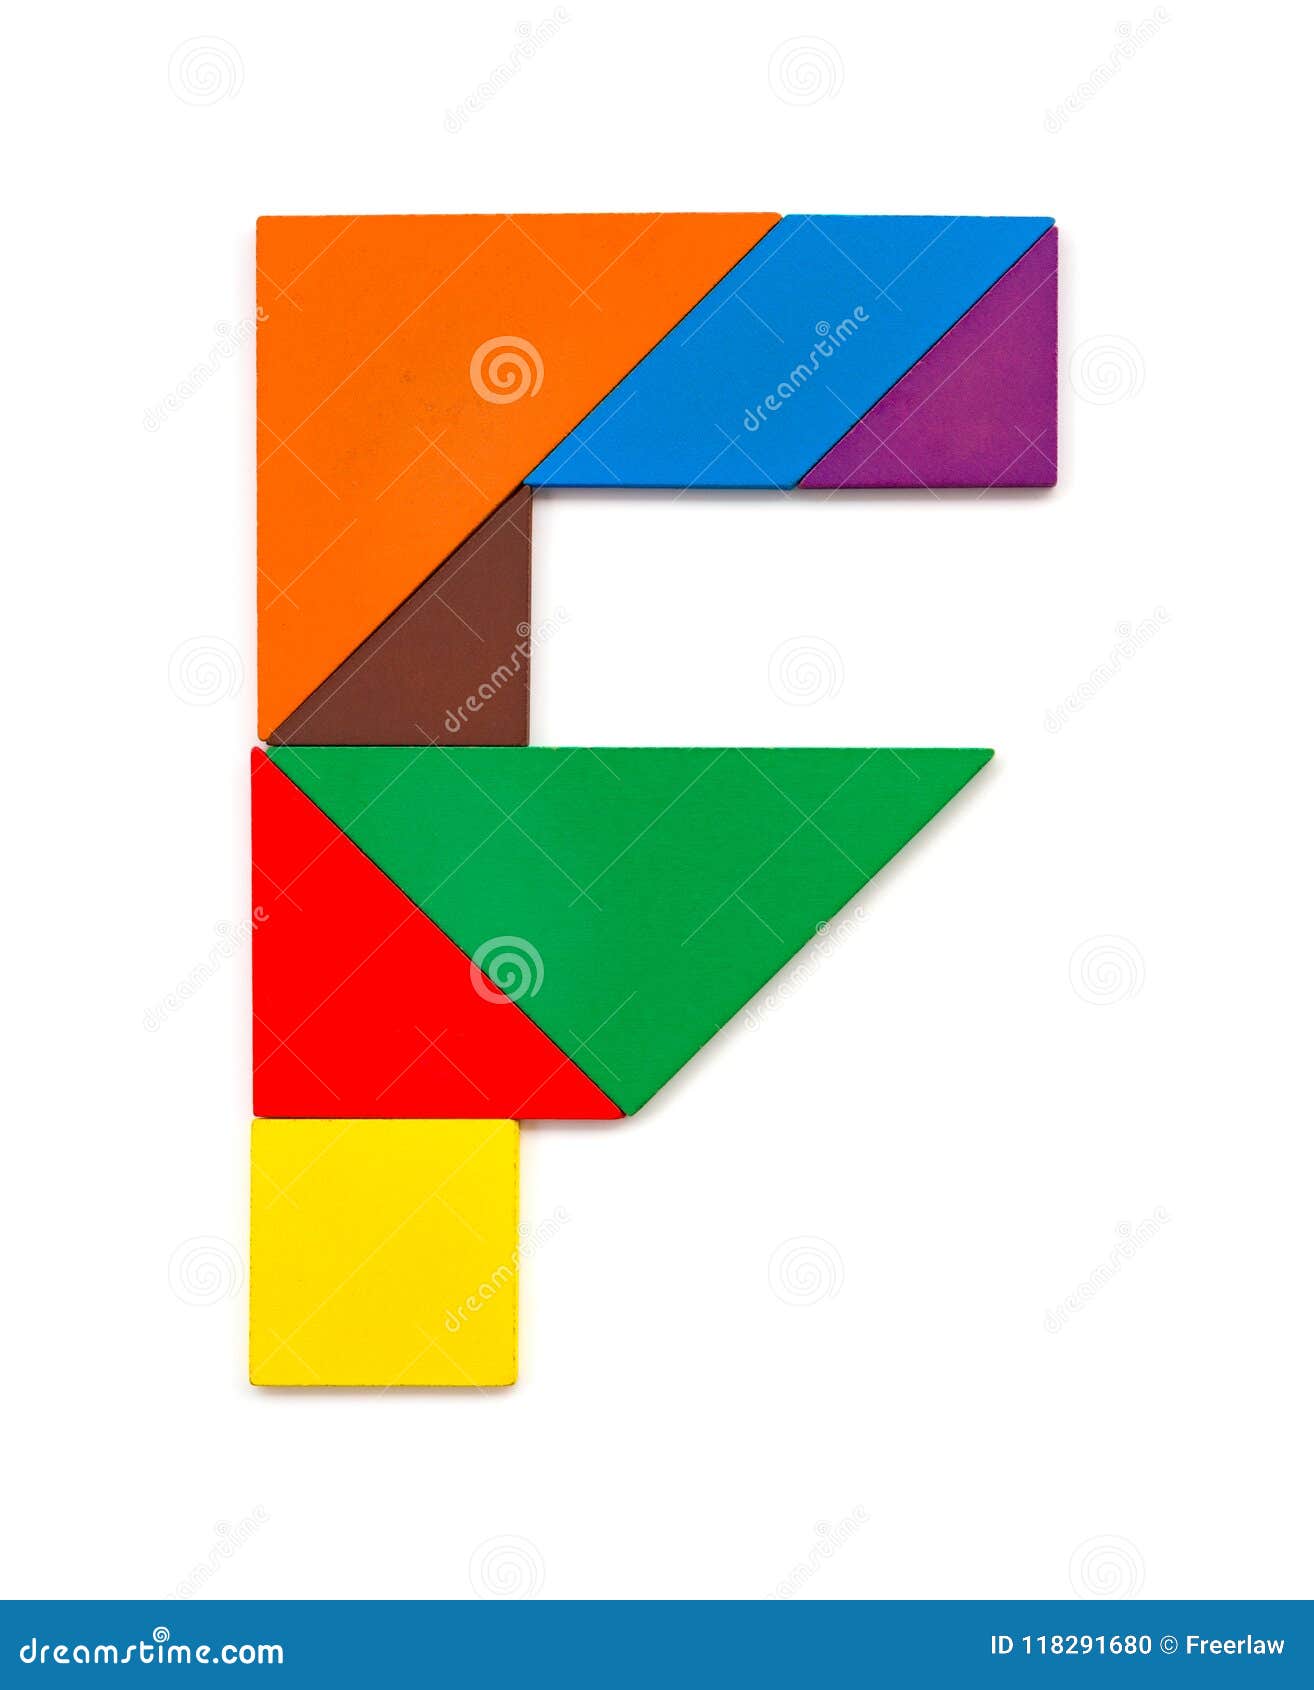 tangram shaped like a letter f on white stock photo